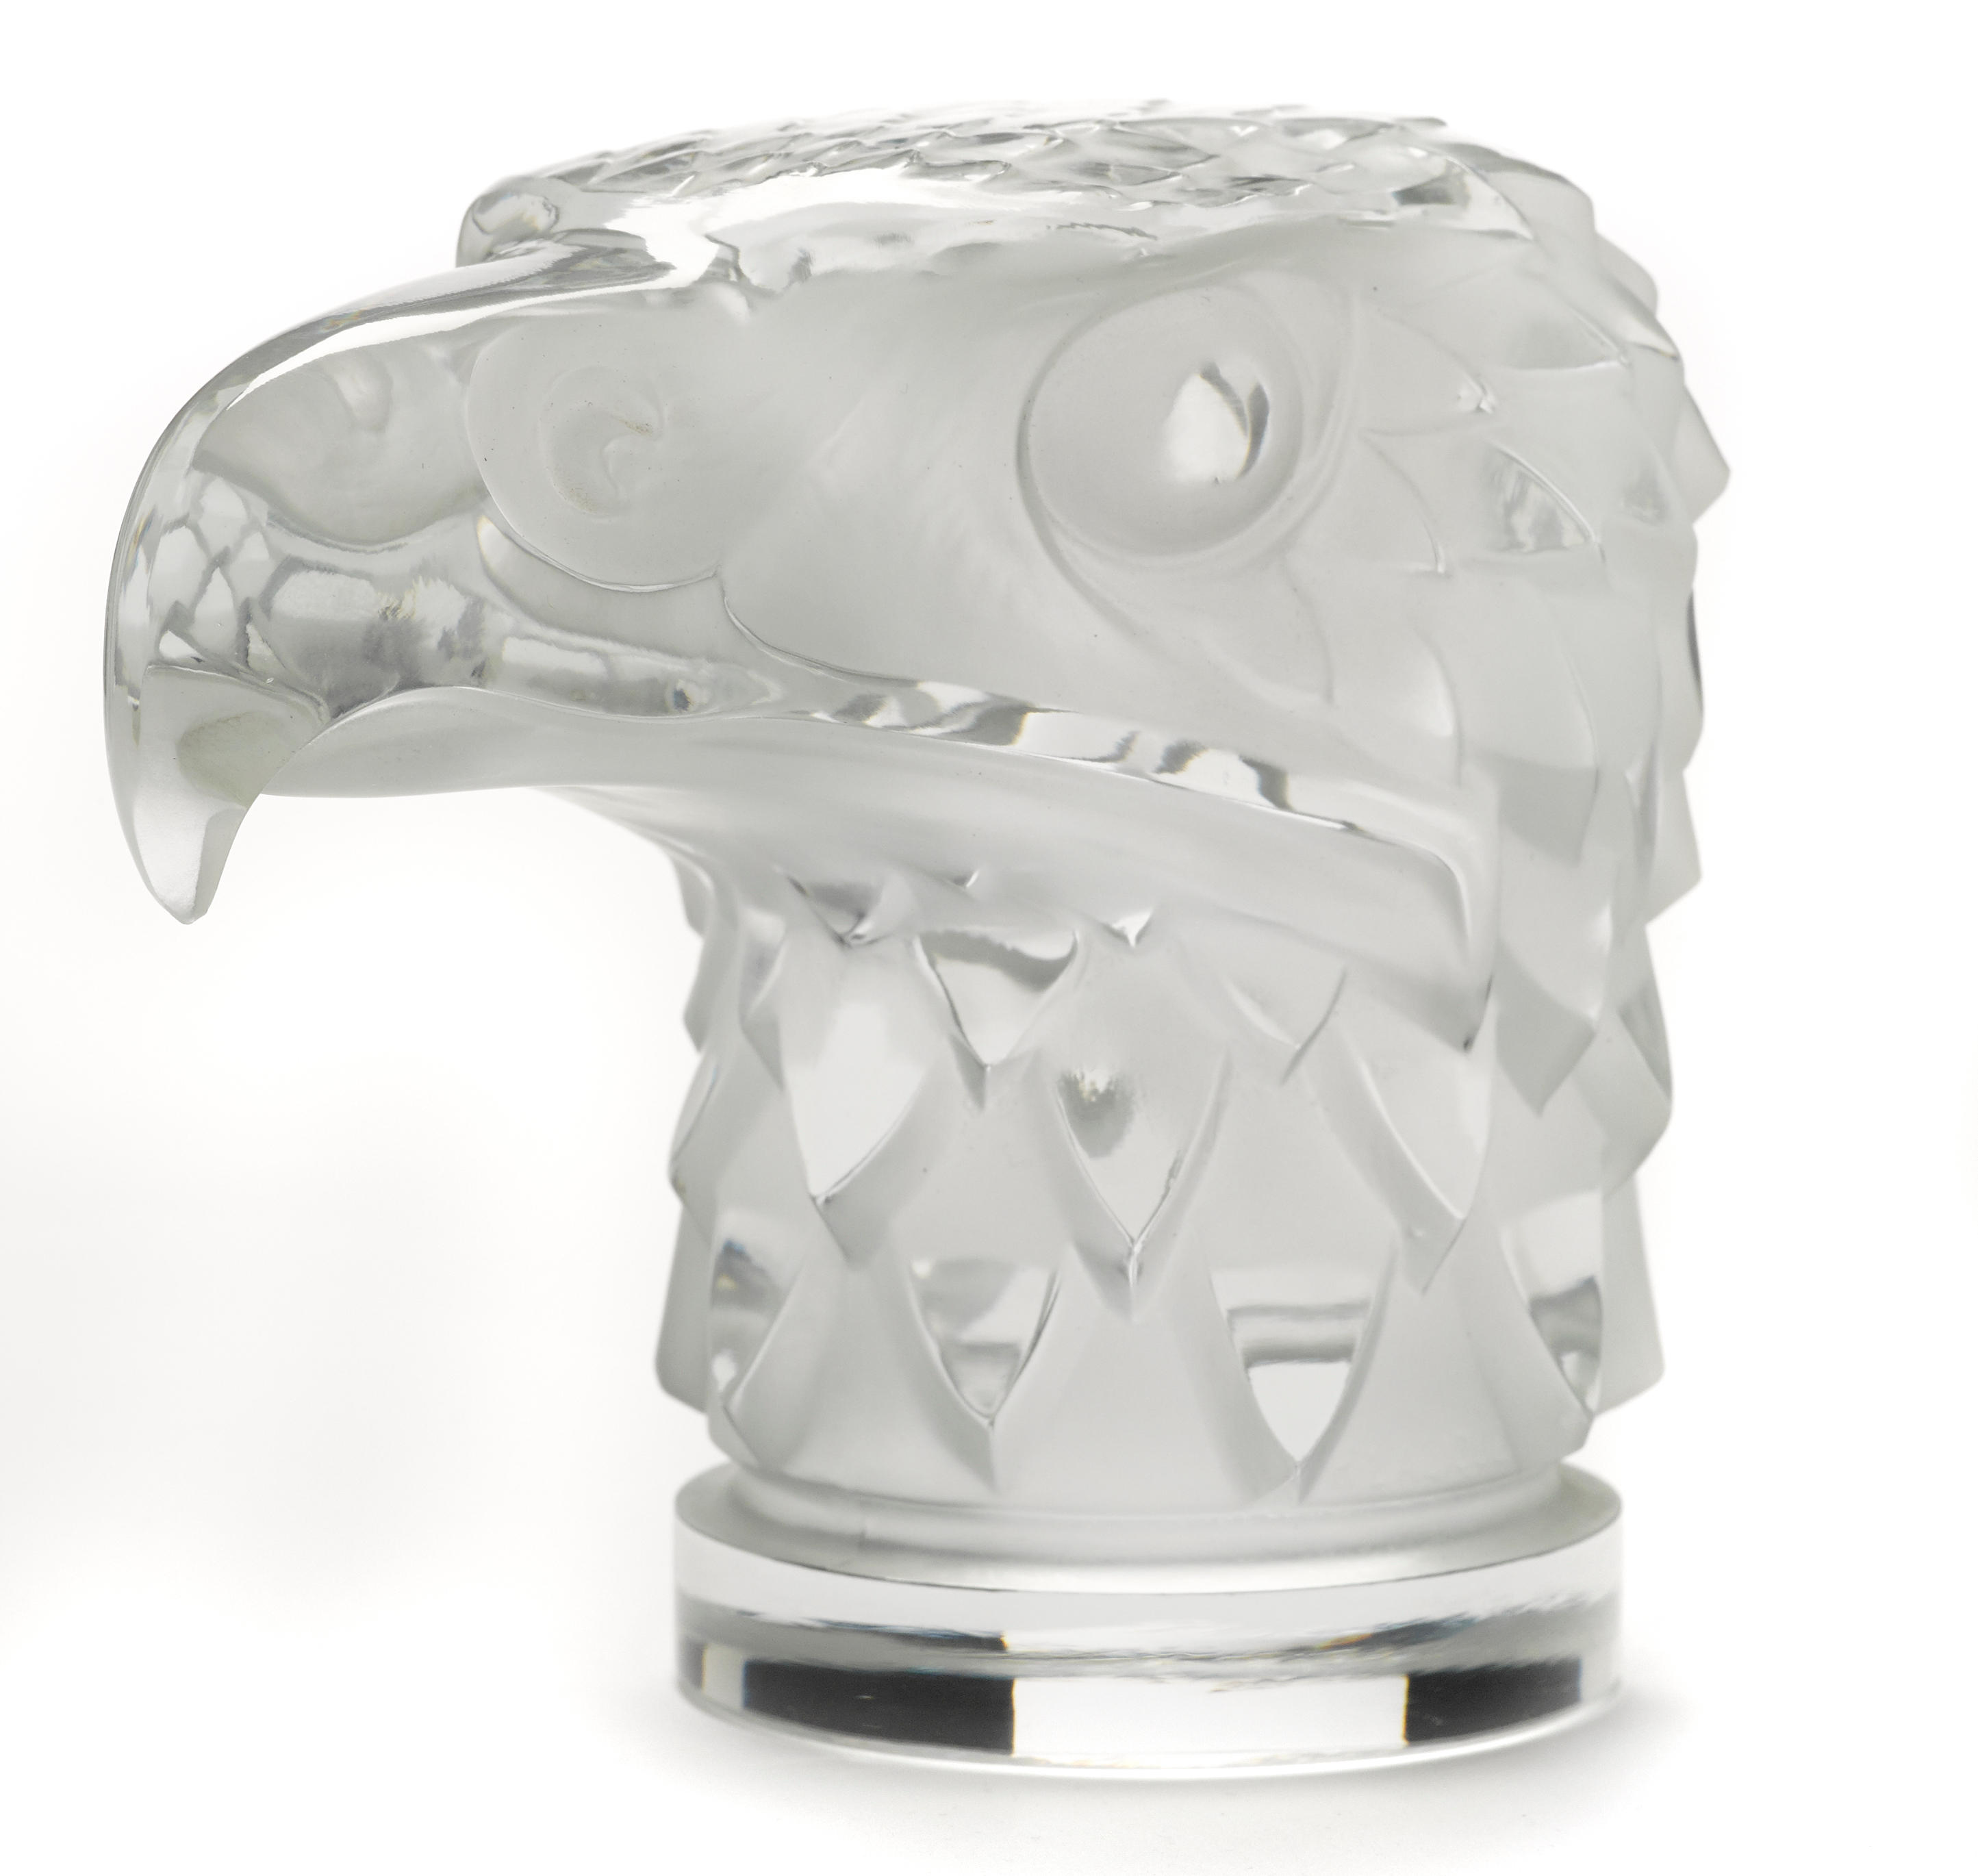 A 'Tete d'Aigle' glass mascot by René Lalique, French,